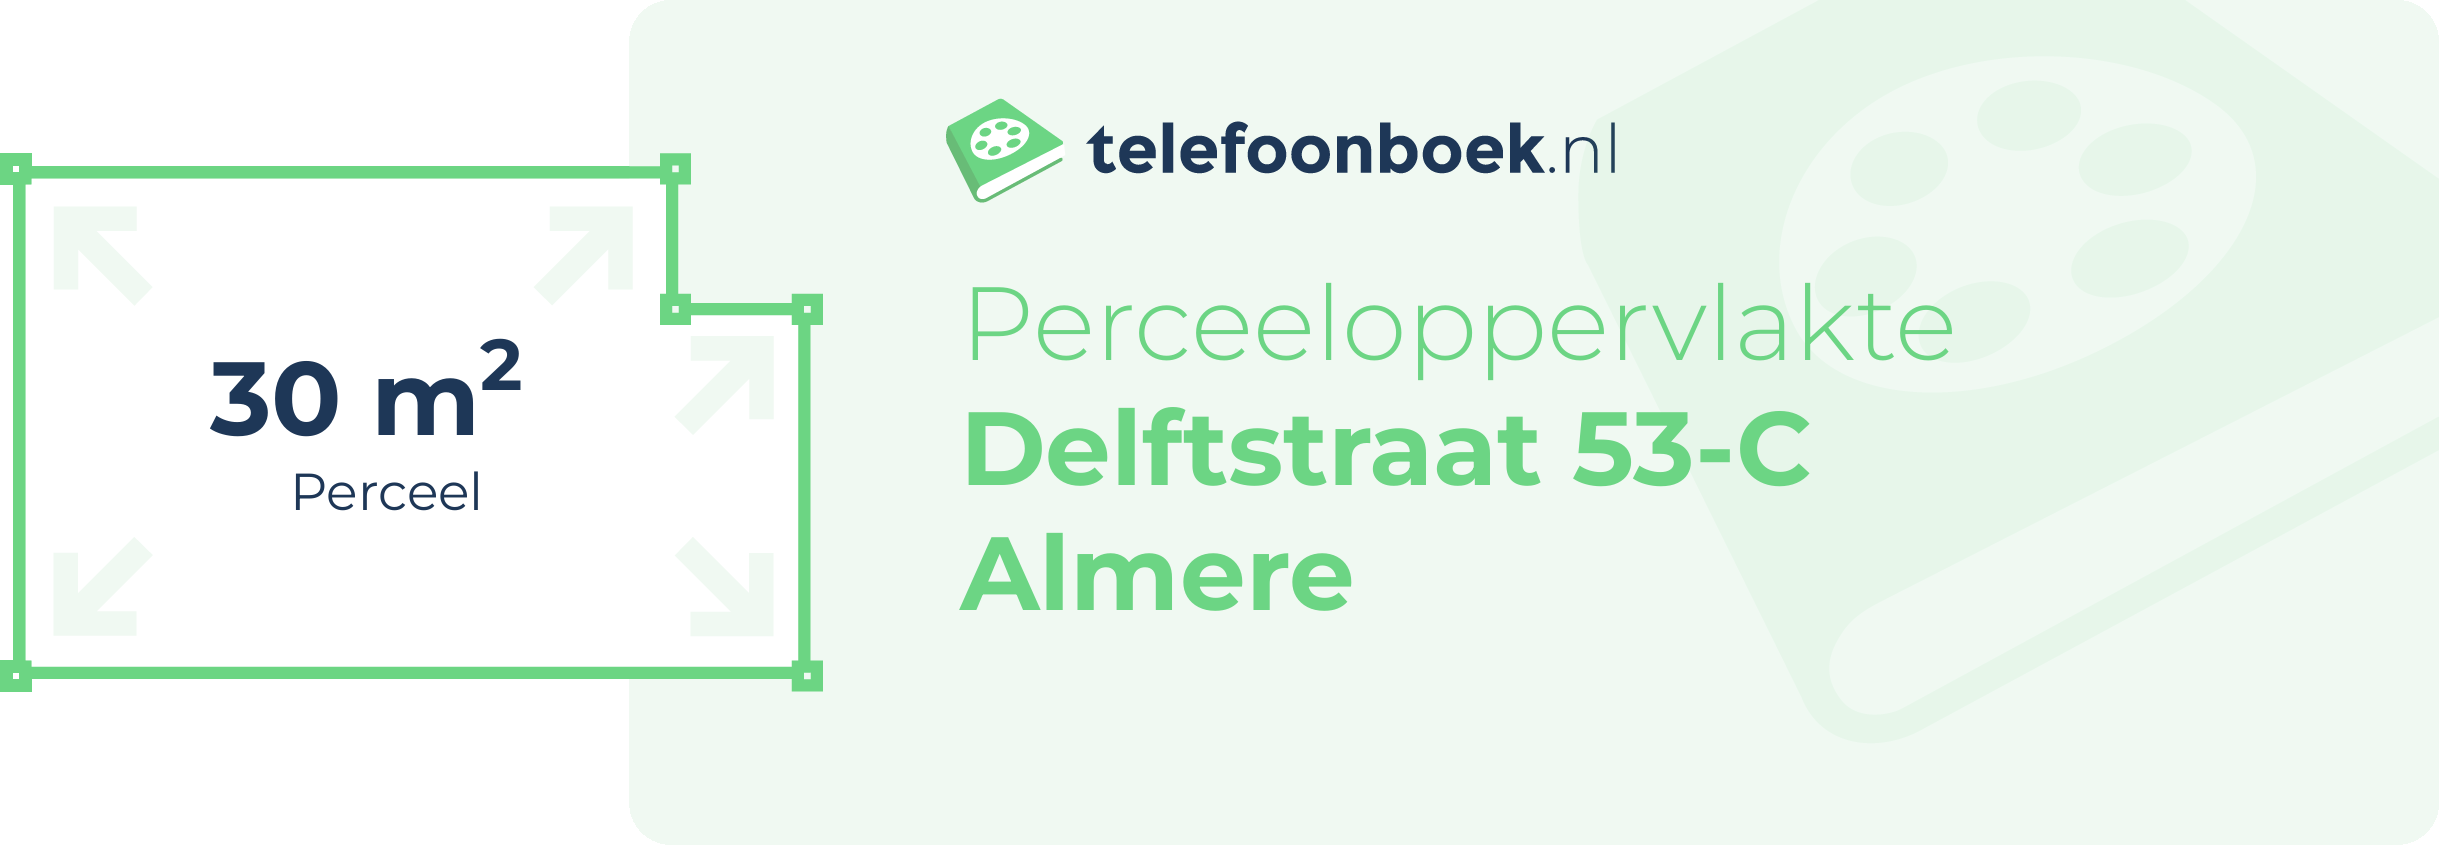 Perceeloppervlakte Delftstraat 53-C Almere